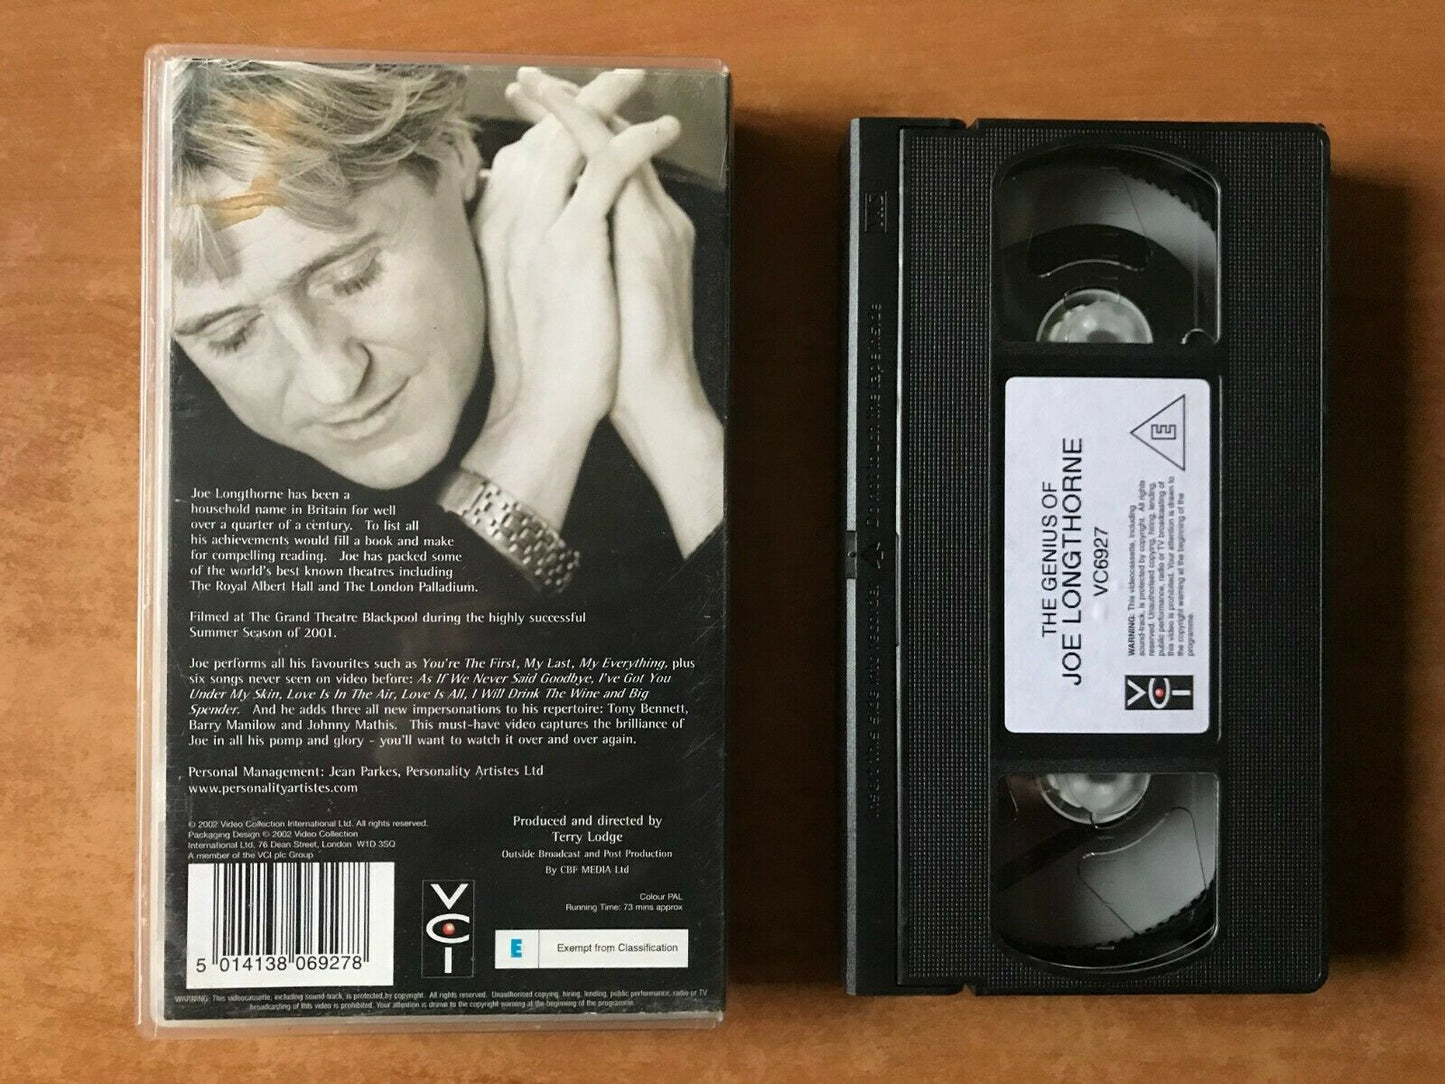 The Genius Of Joe Longthorne - Live Performance - Greatest Hits - Music - VHS-